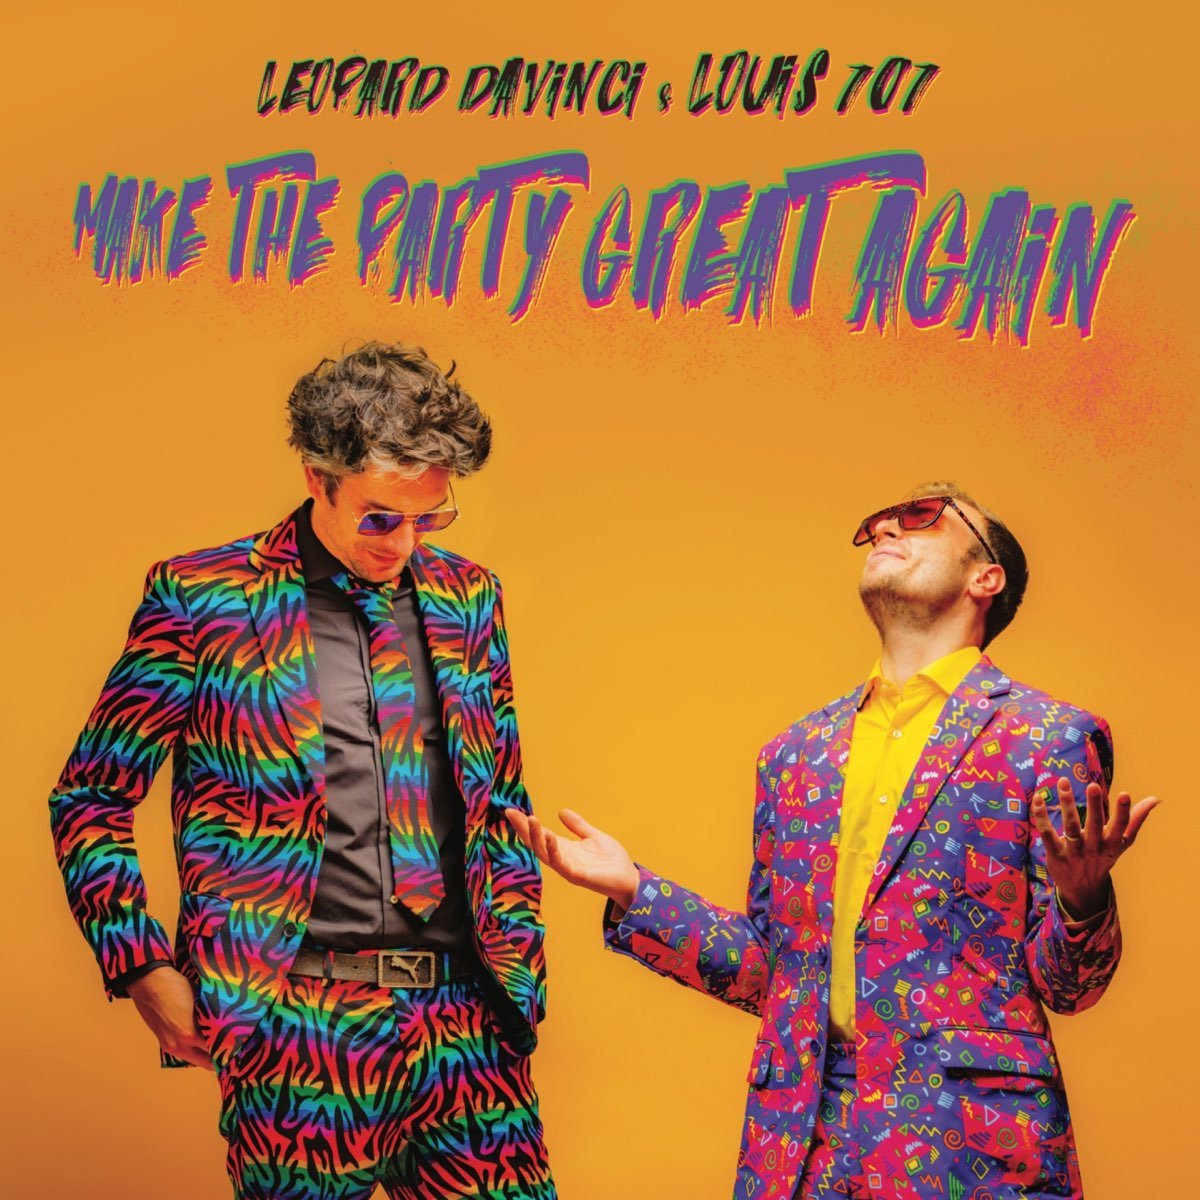 Leopard DaVinci & Louis 707 - Make The Party Great Again